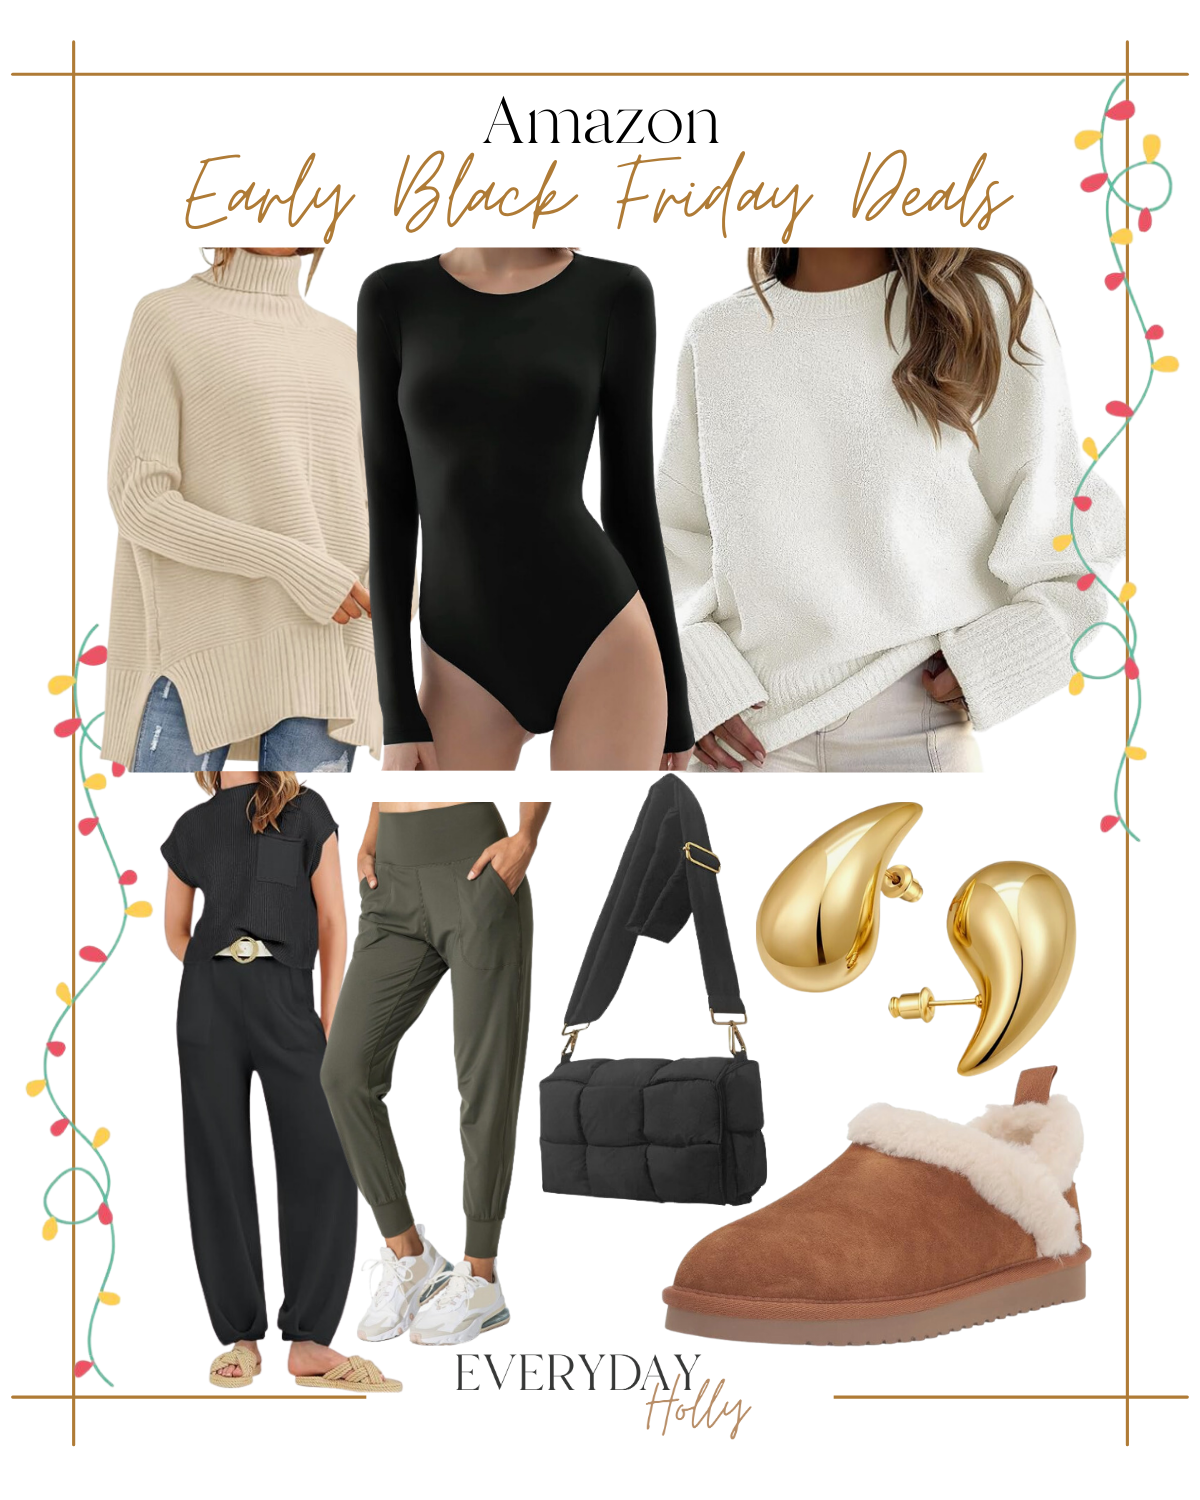 shop early black friday deals now | #shop #blackfriday #deals #earlyblackfriday #shopping #gifts #fashion #sweater #bodysuit #neutral #joggers #slippers #earrings